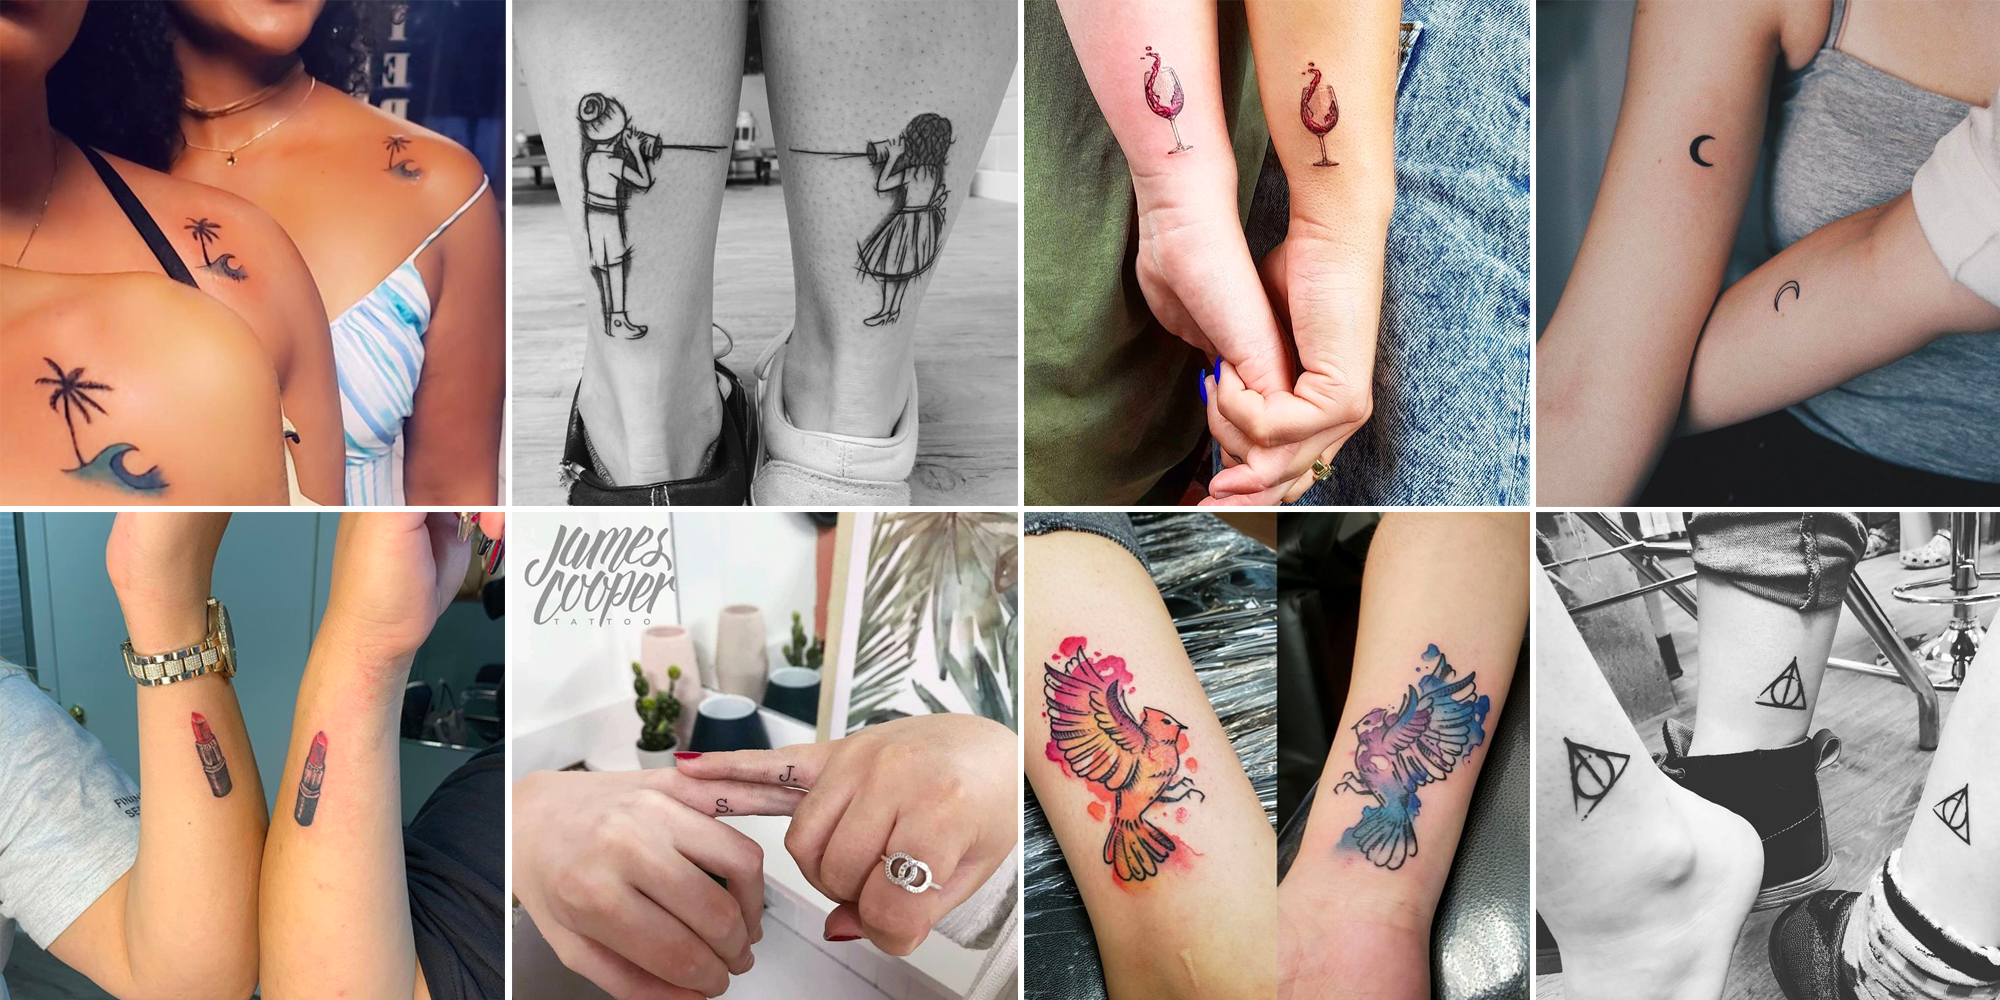 best friend matching tattoos on finger